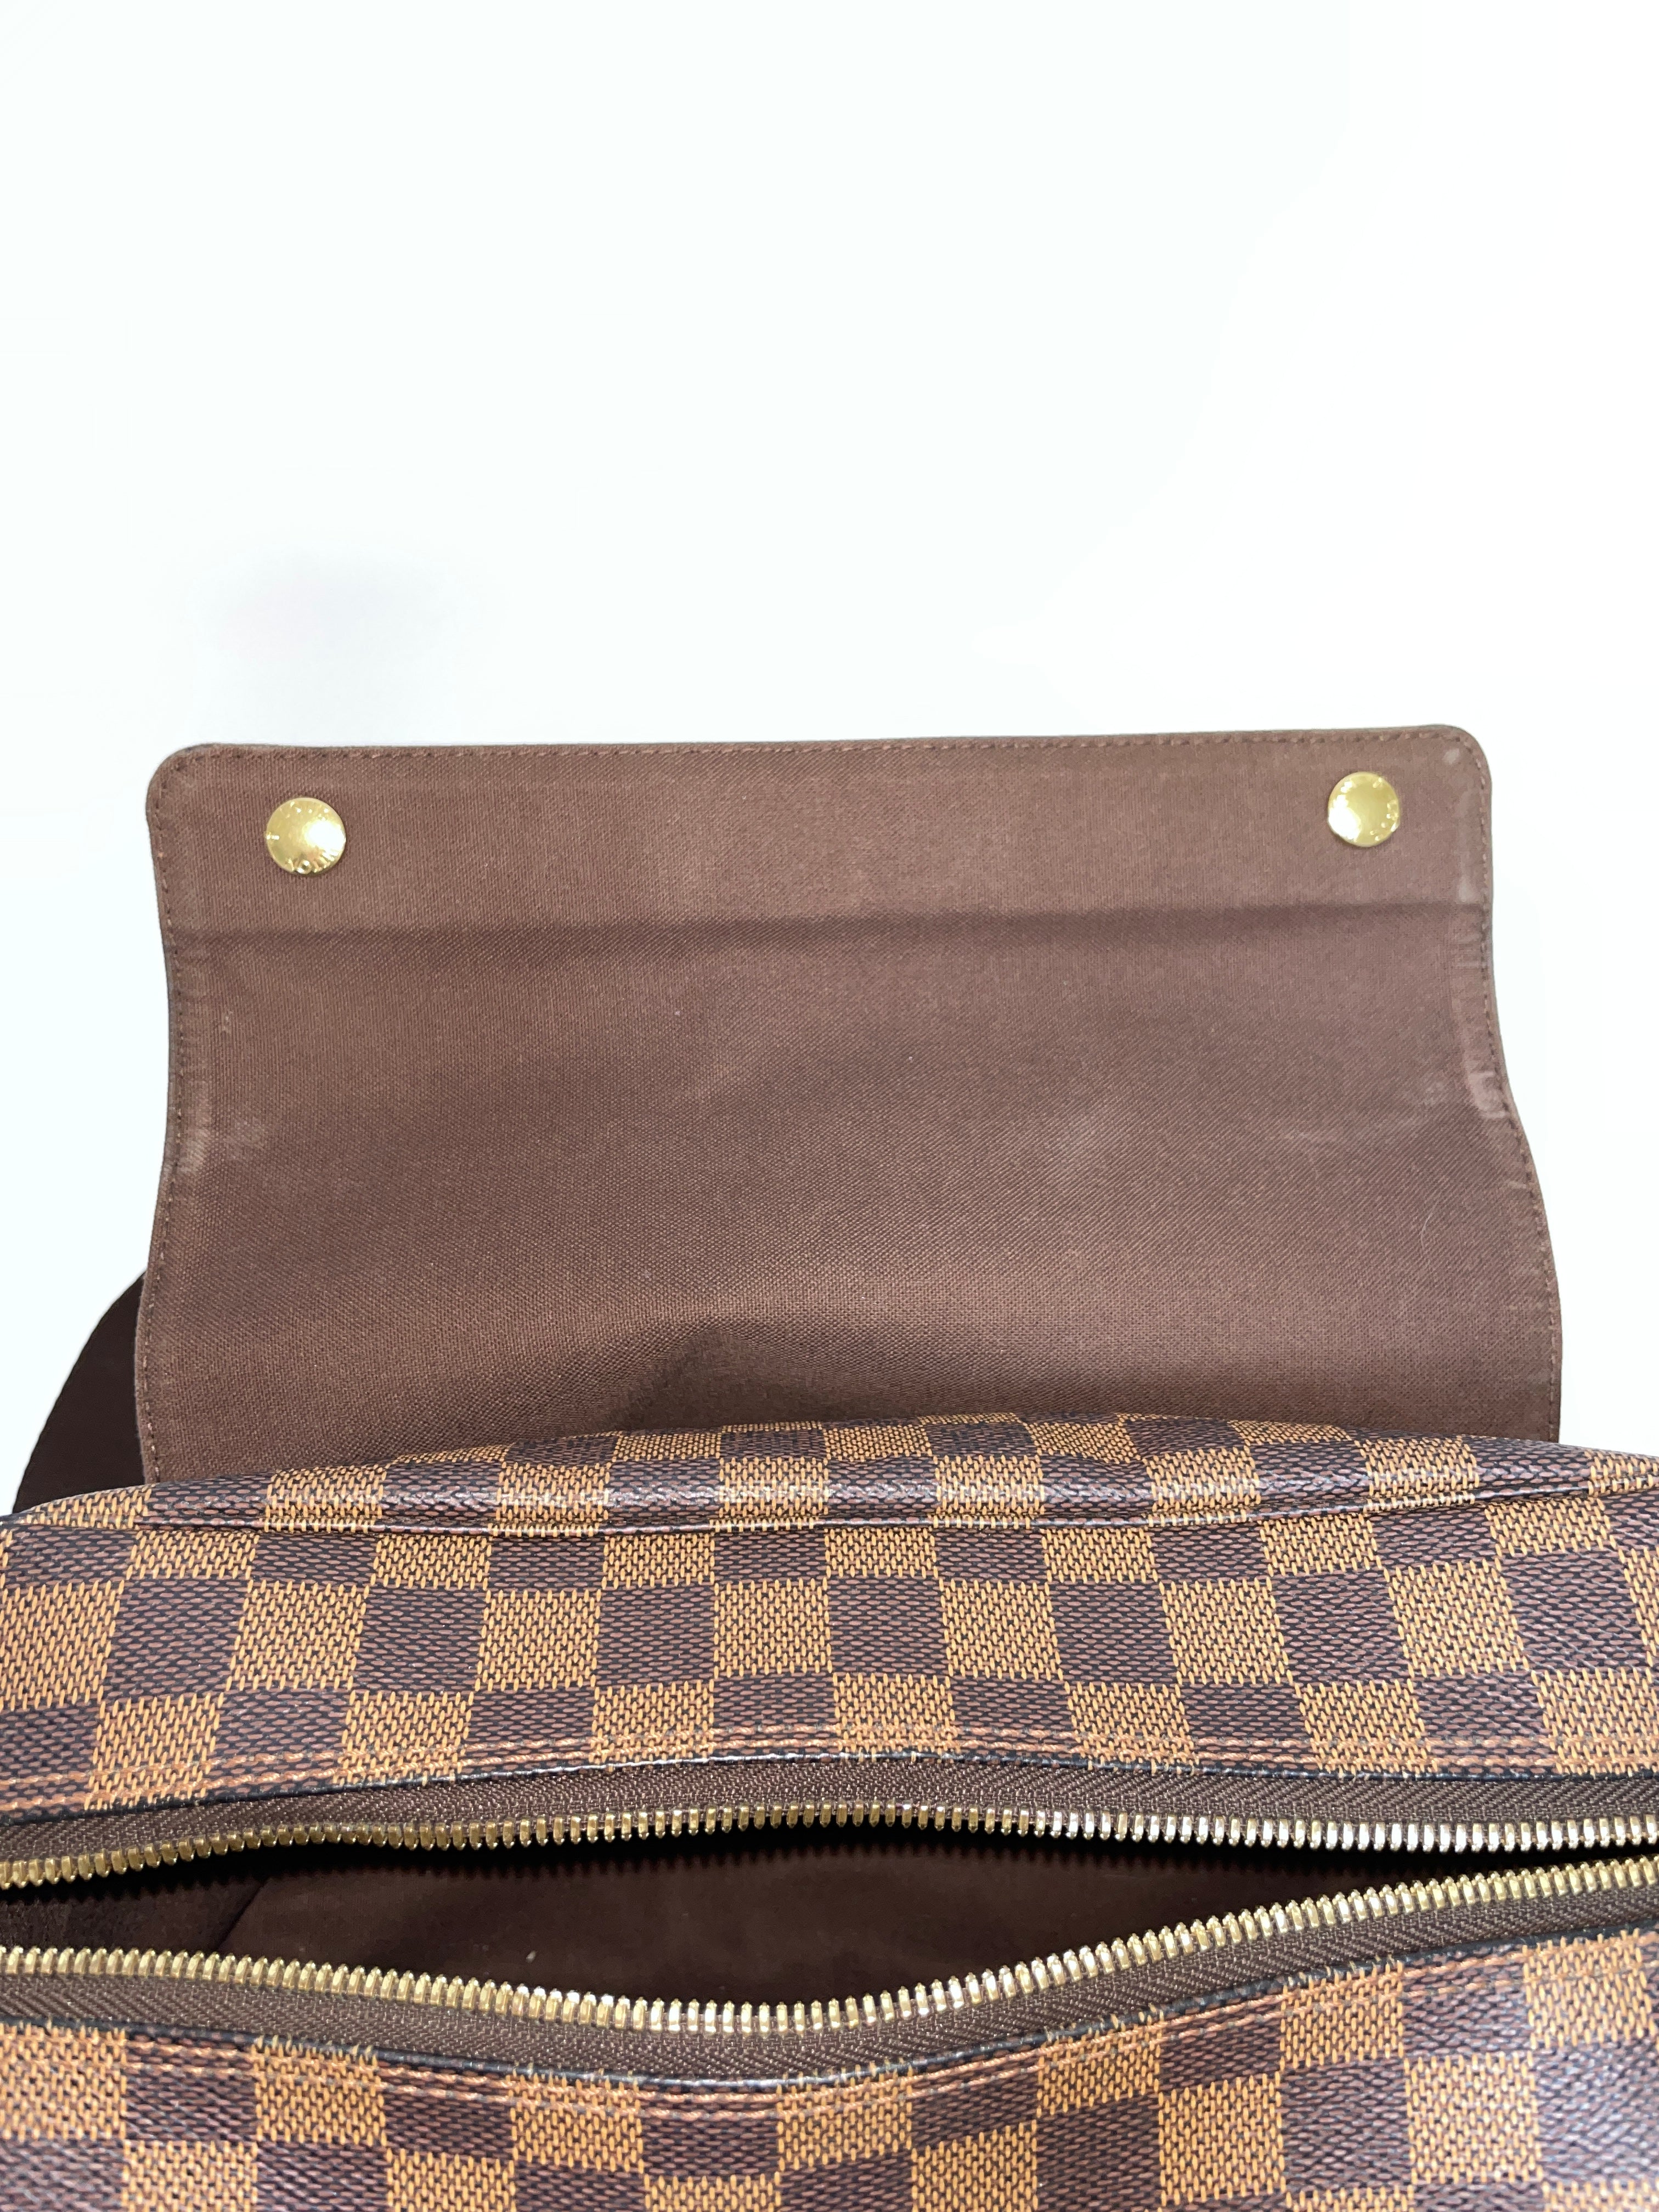 Louis Vuitton Naviglio Damier Ebene Messenger Bag Used (8181)